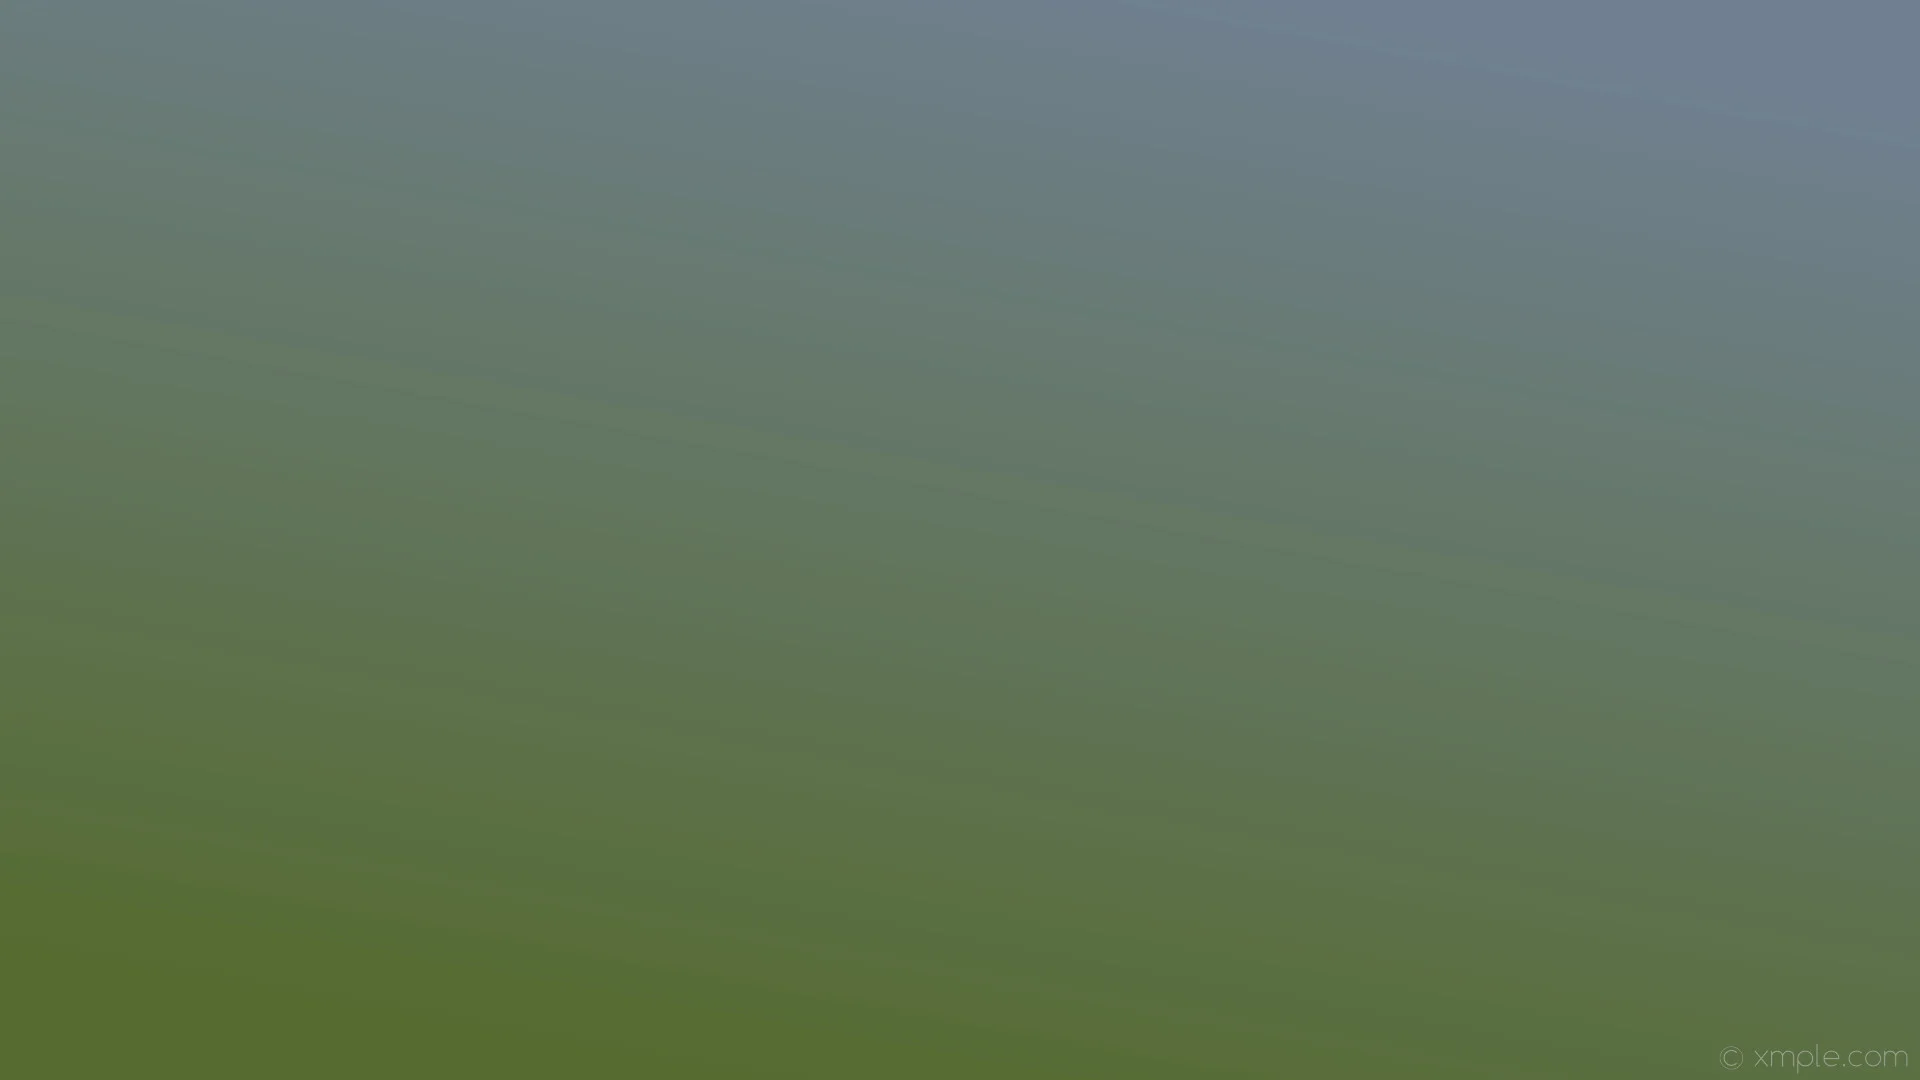 wallpaper green gradient grey linear slate gray dark olive green #708090  #556b2f 60Â°